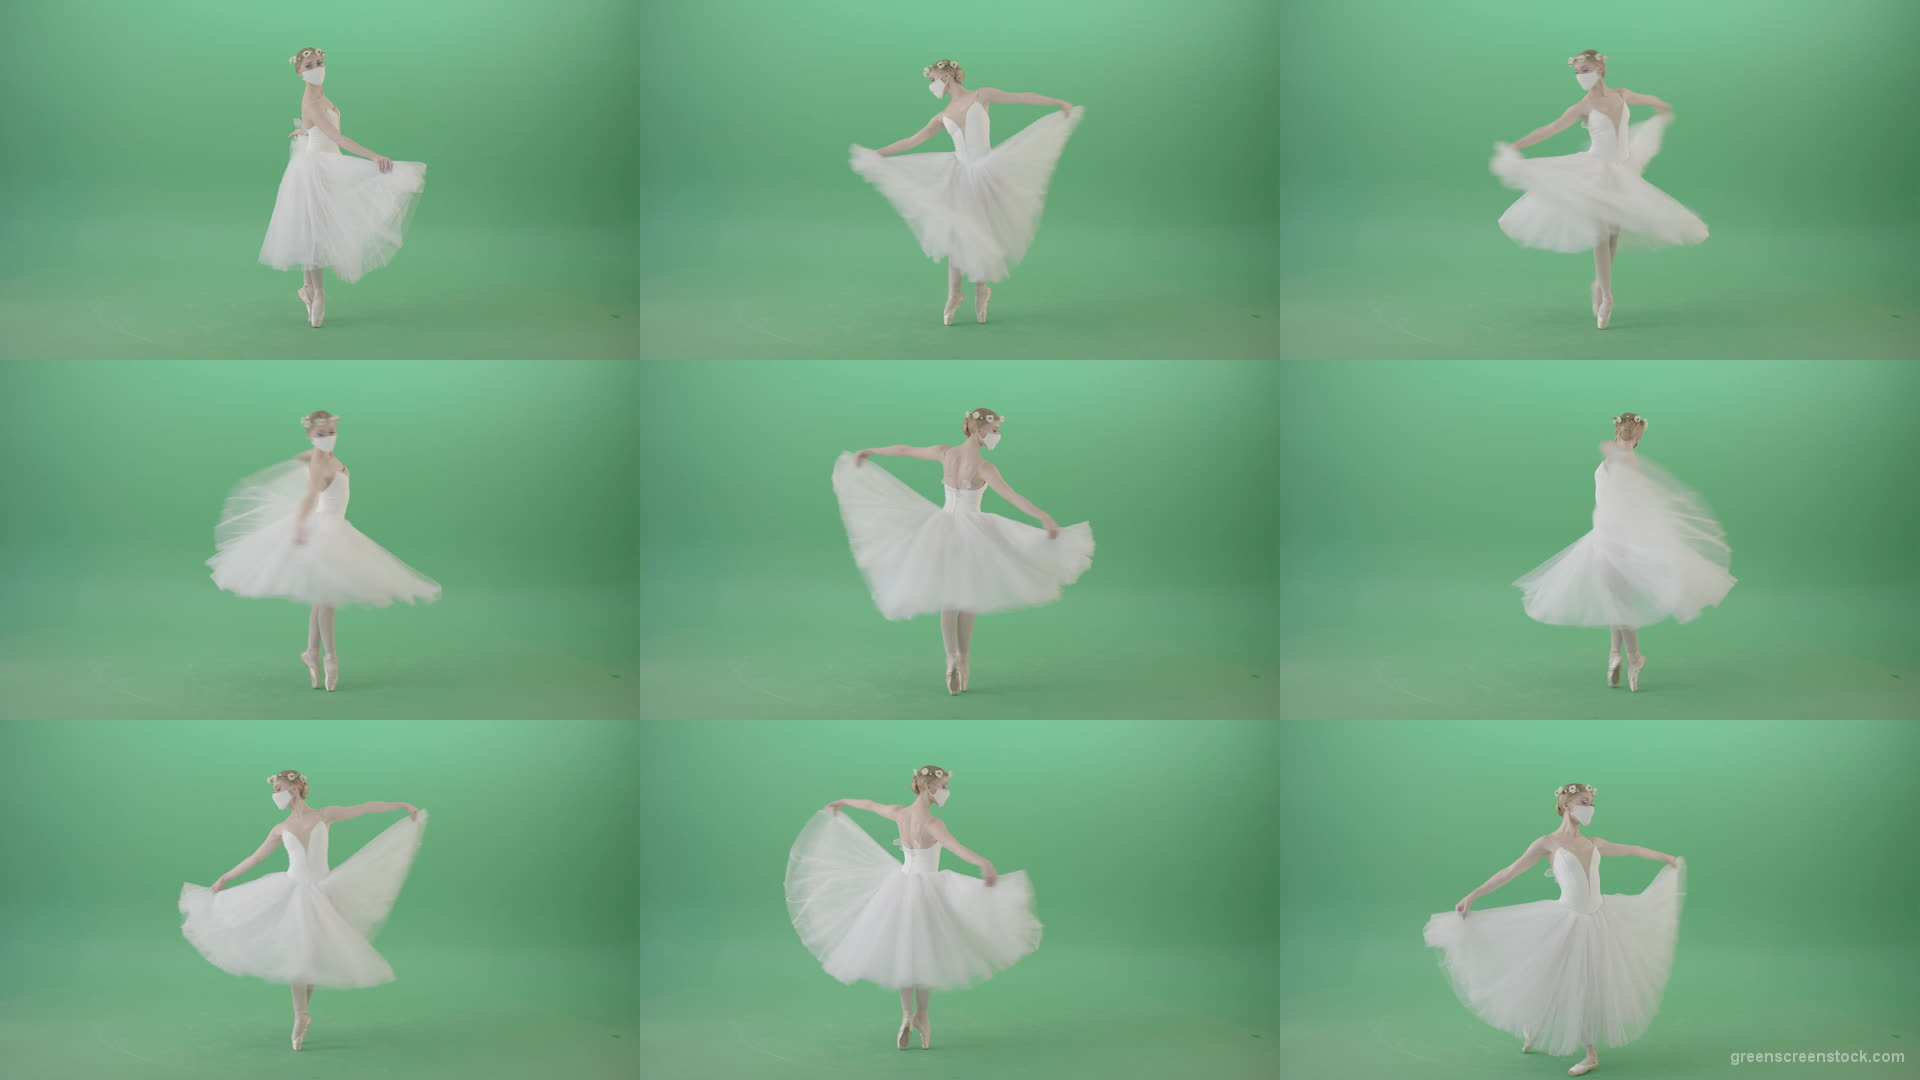 Ballet-Dancing-Girl-in-Corona-Virus-Mask-spinning-on-green-screen-4K-Video-Footage-1920 Green Screen Stock